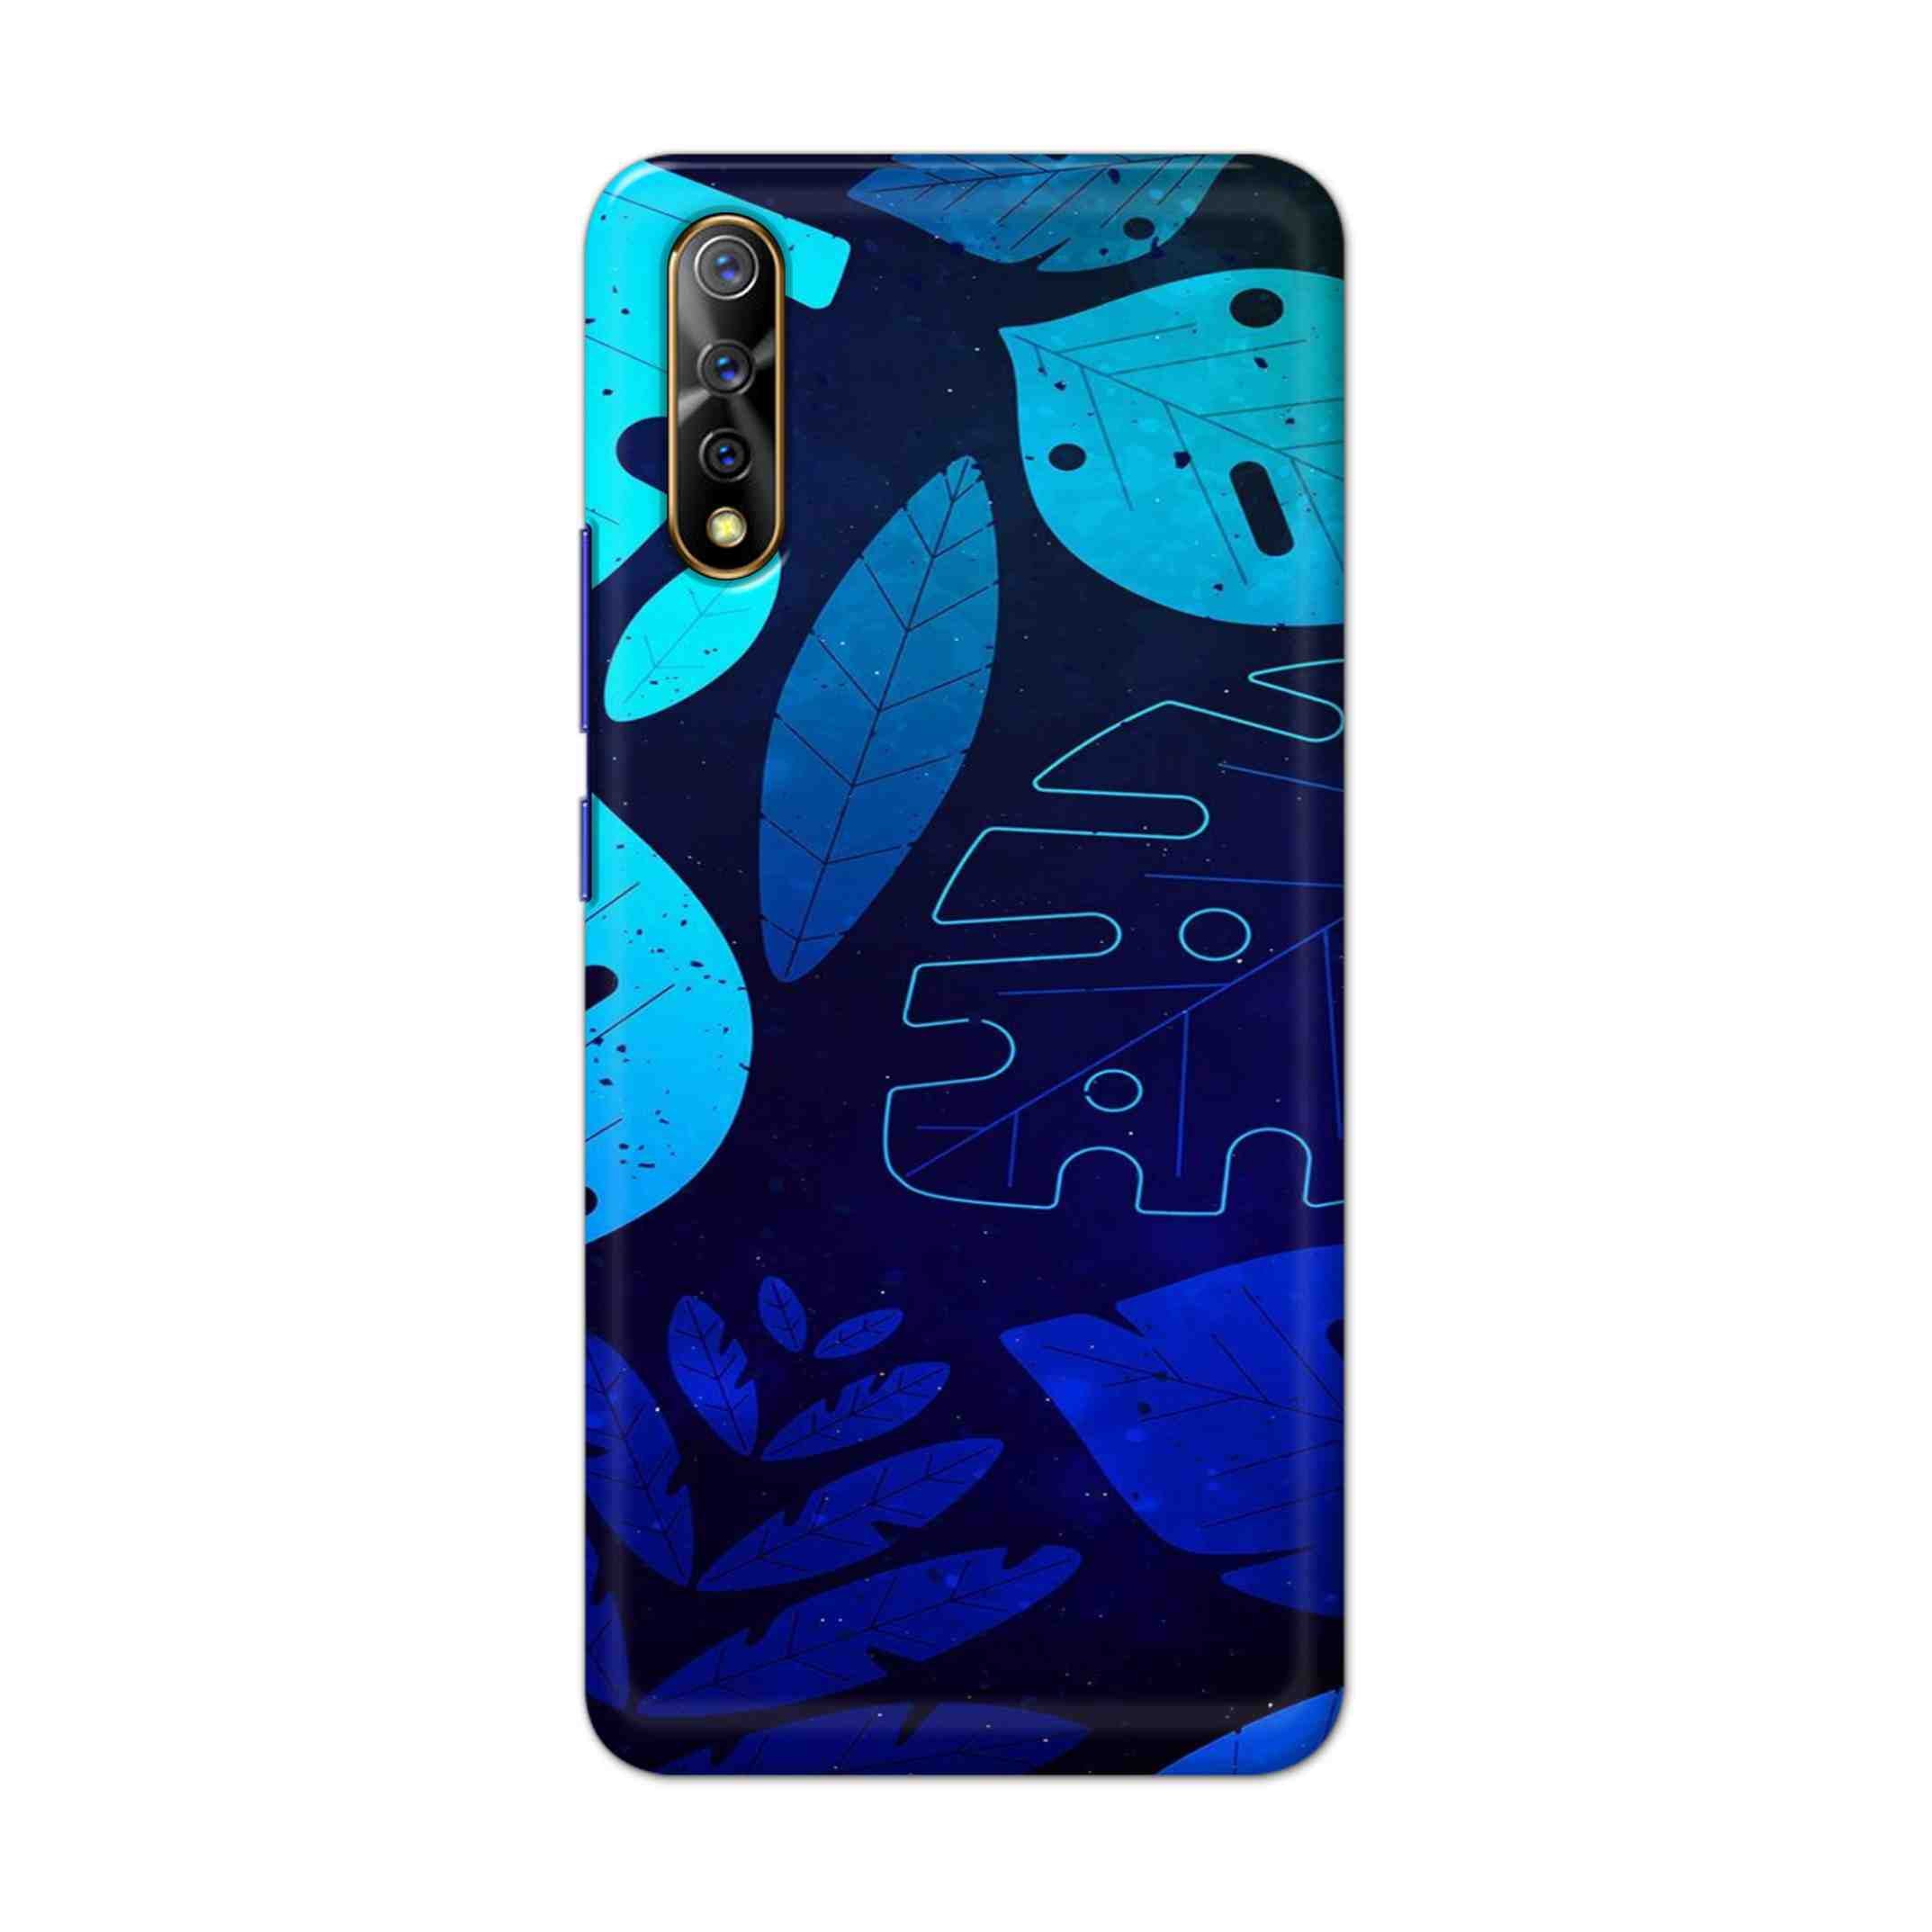 Buy Neon Leaf Hard Back Mobile Phone Case Cover For Vivo S1 / Z1x Online